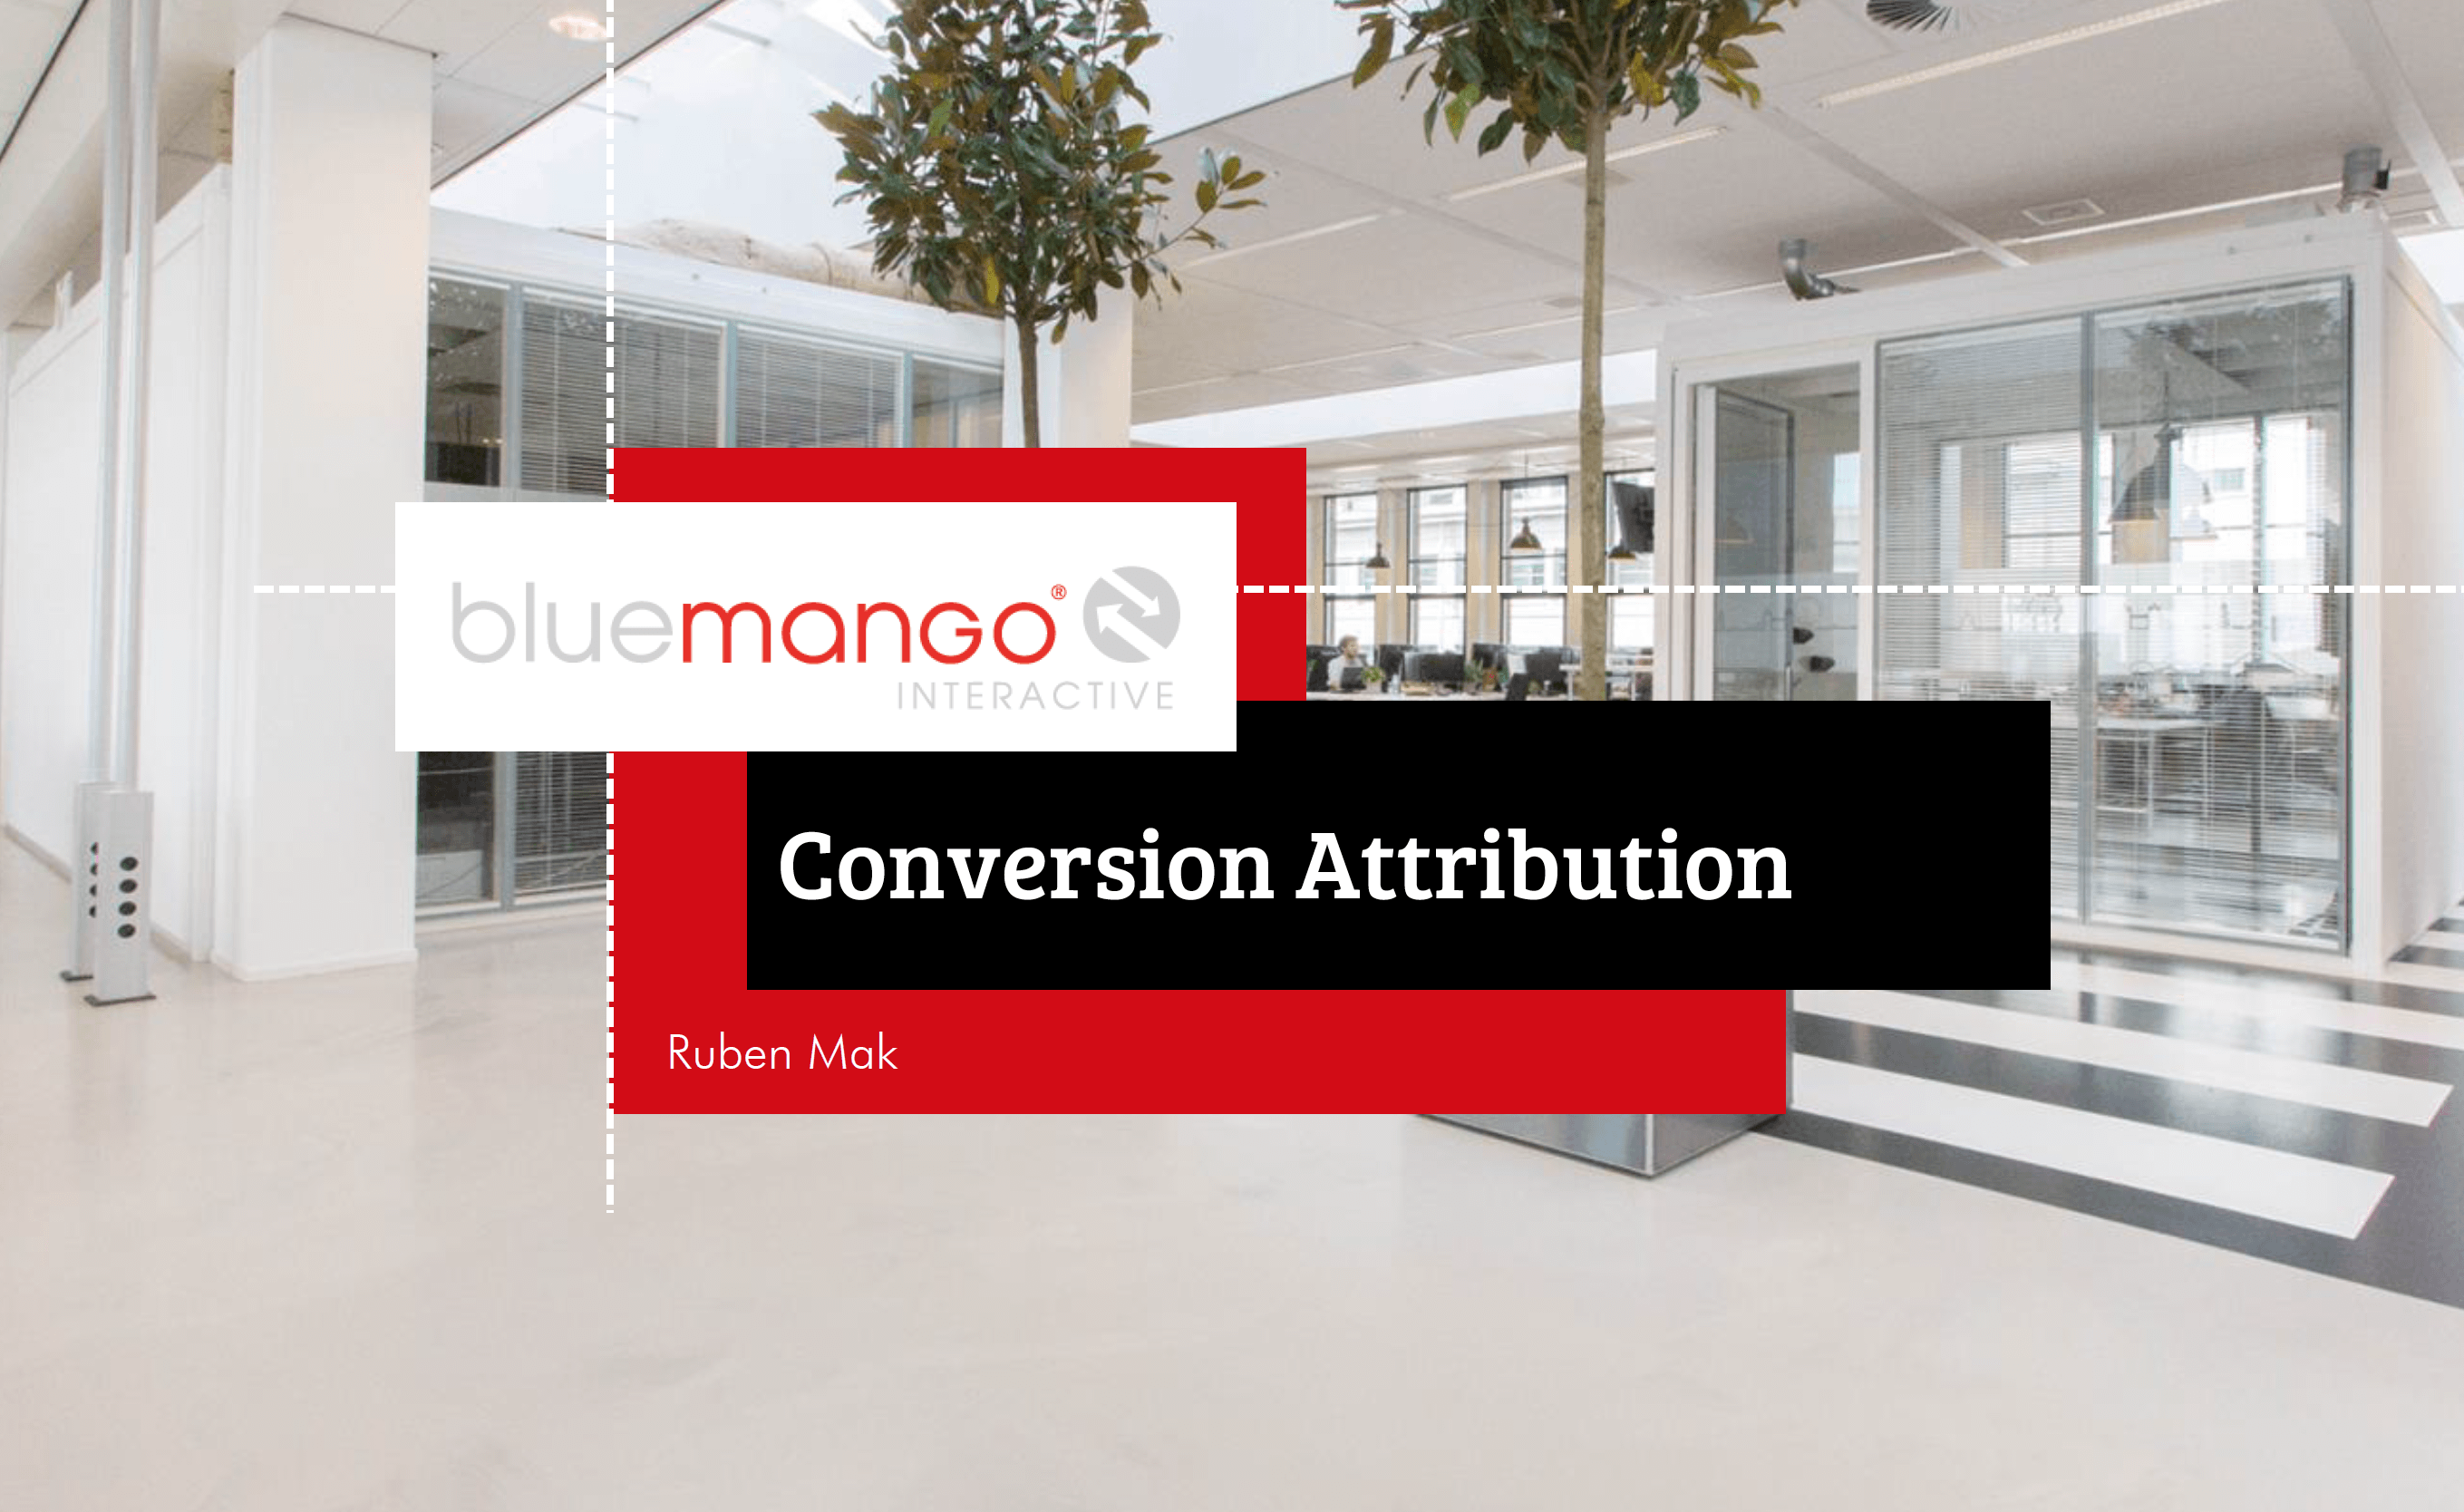 Blue mango interactive - conversion attribution presentation with Ruben Mak